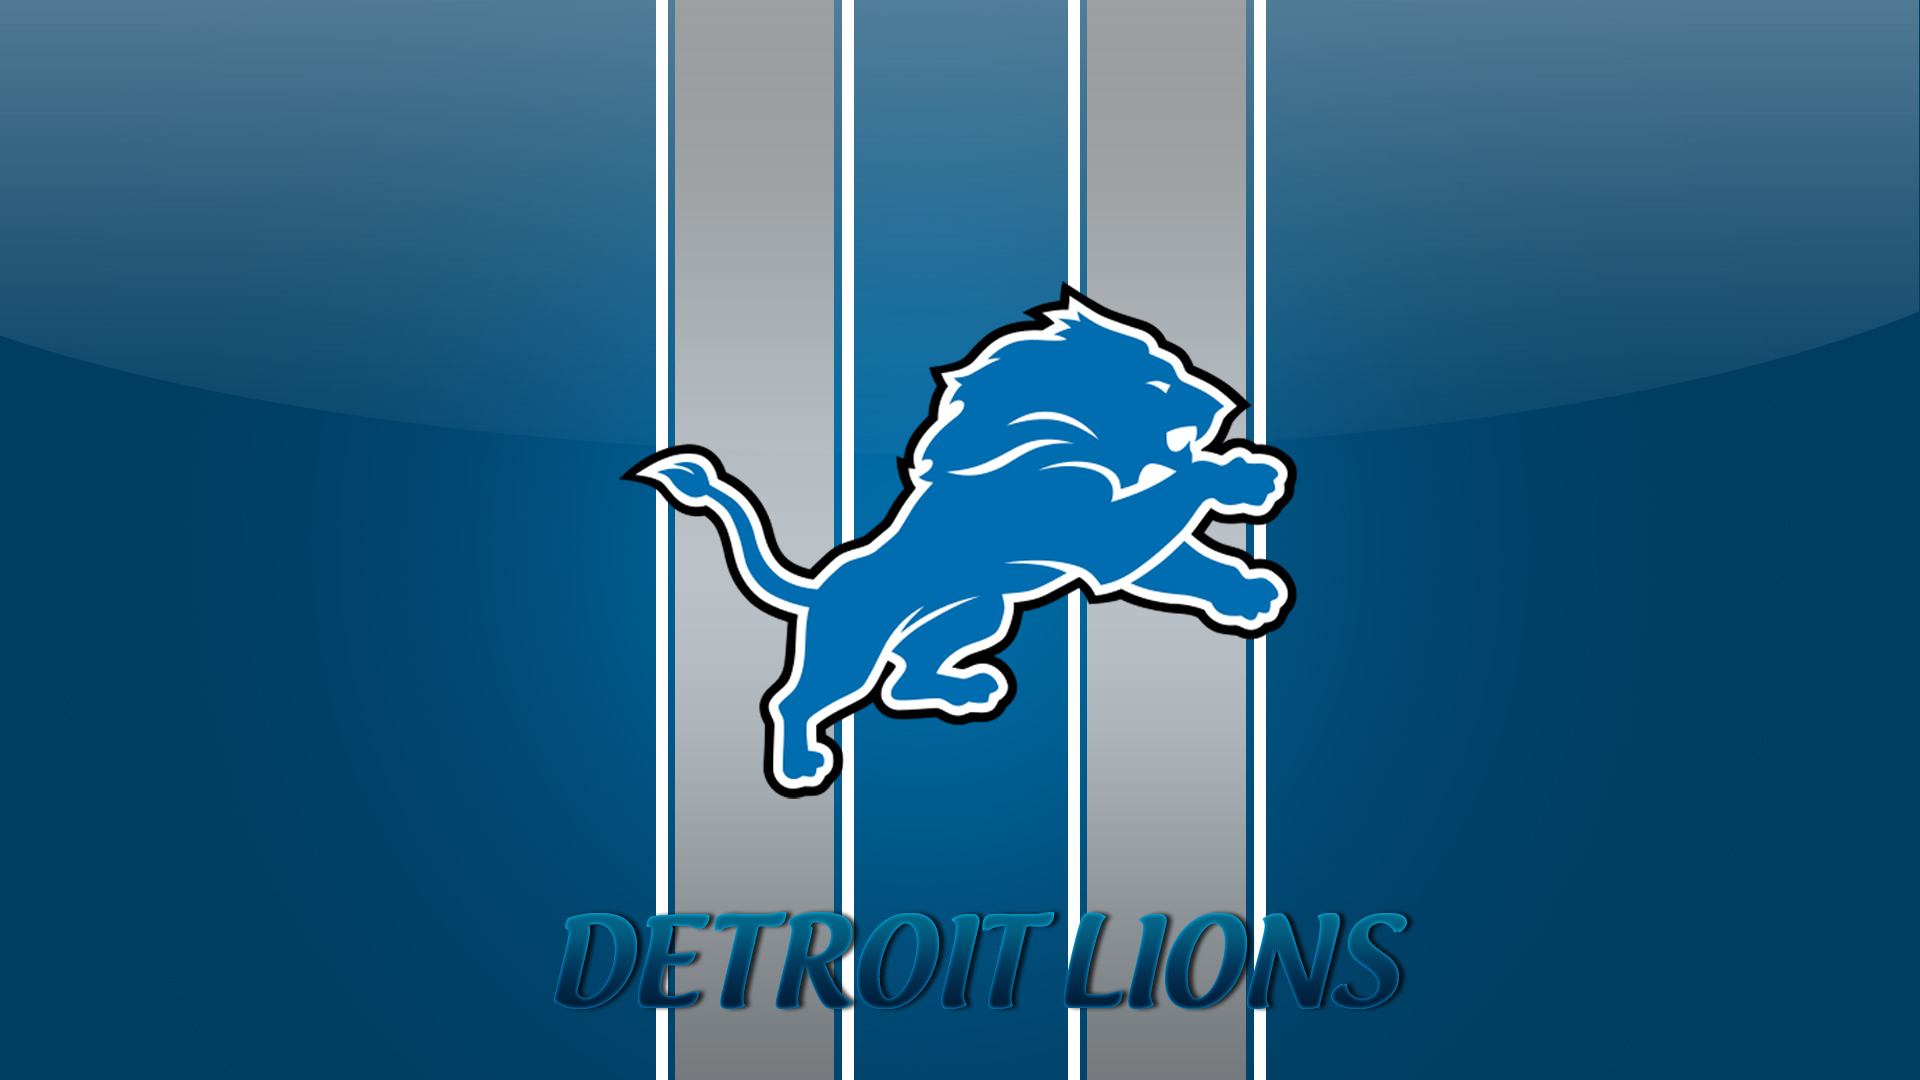 Detroit Lions Wallpaper HD - PixelsTalk.Net